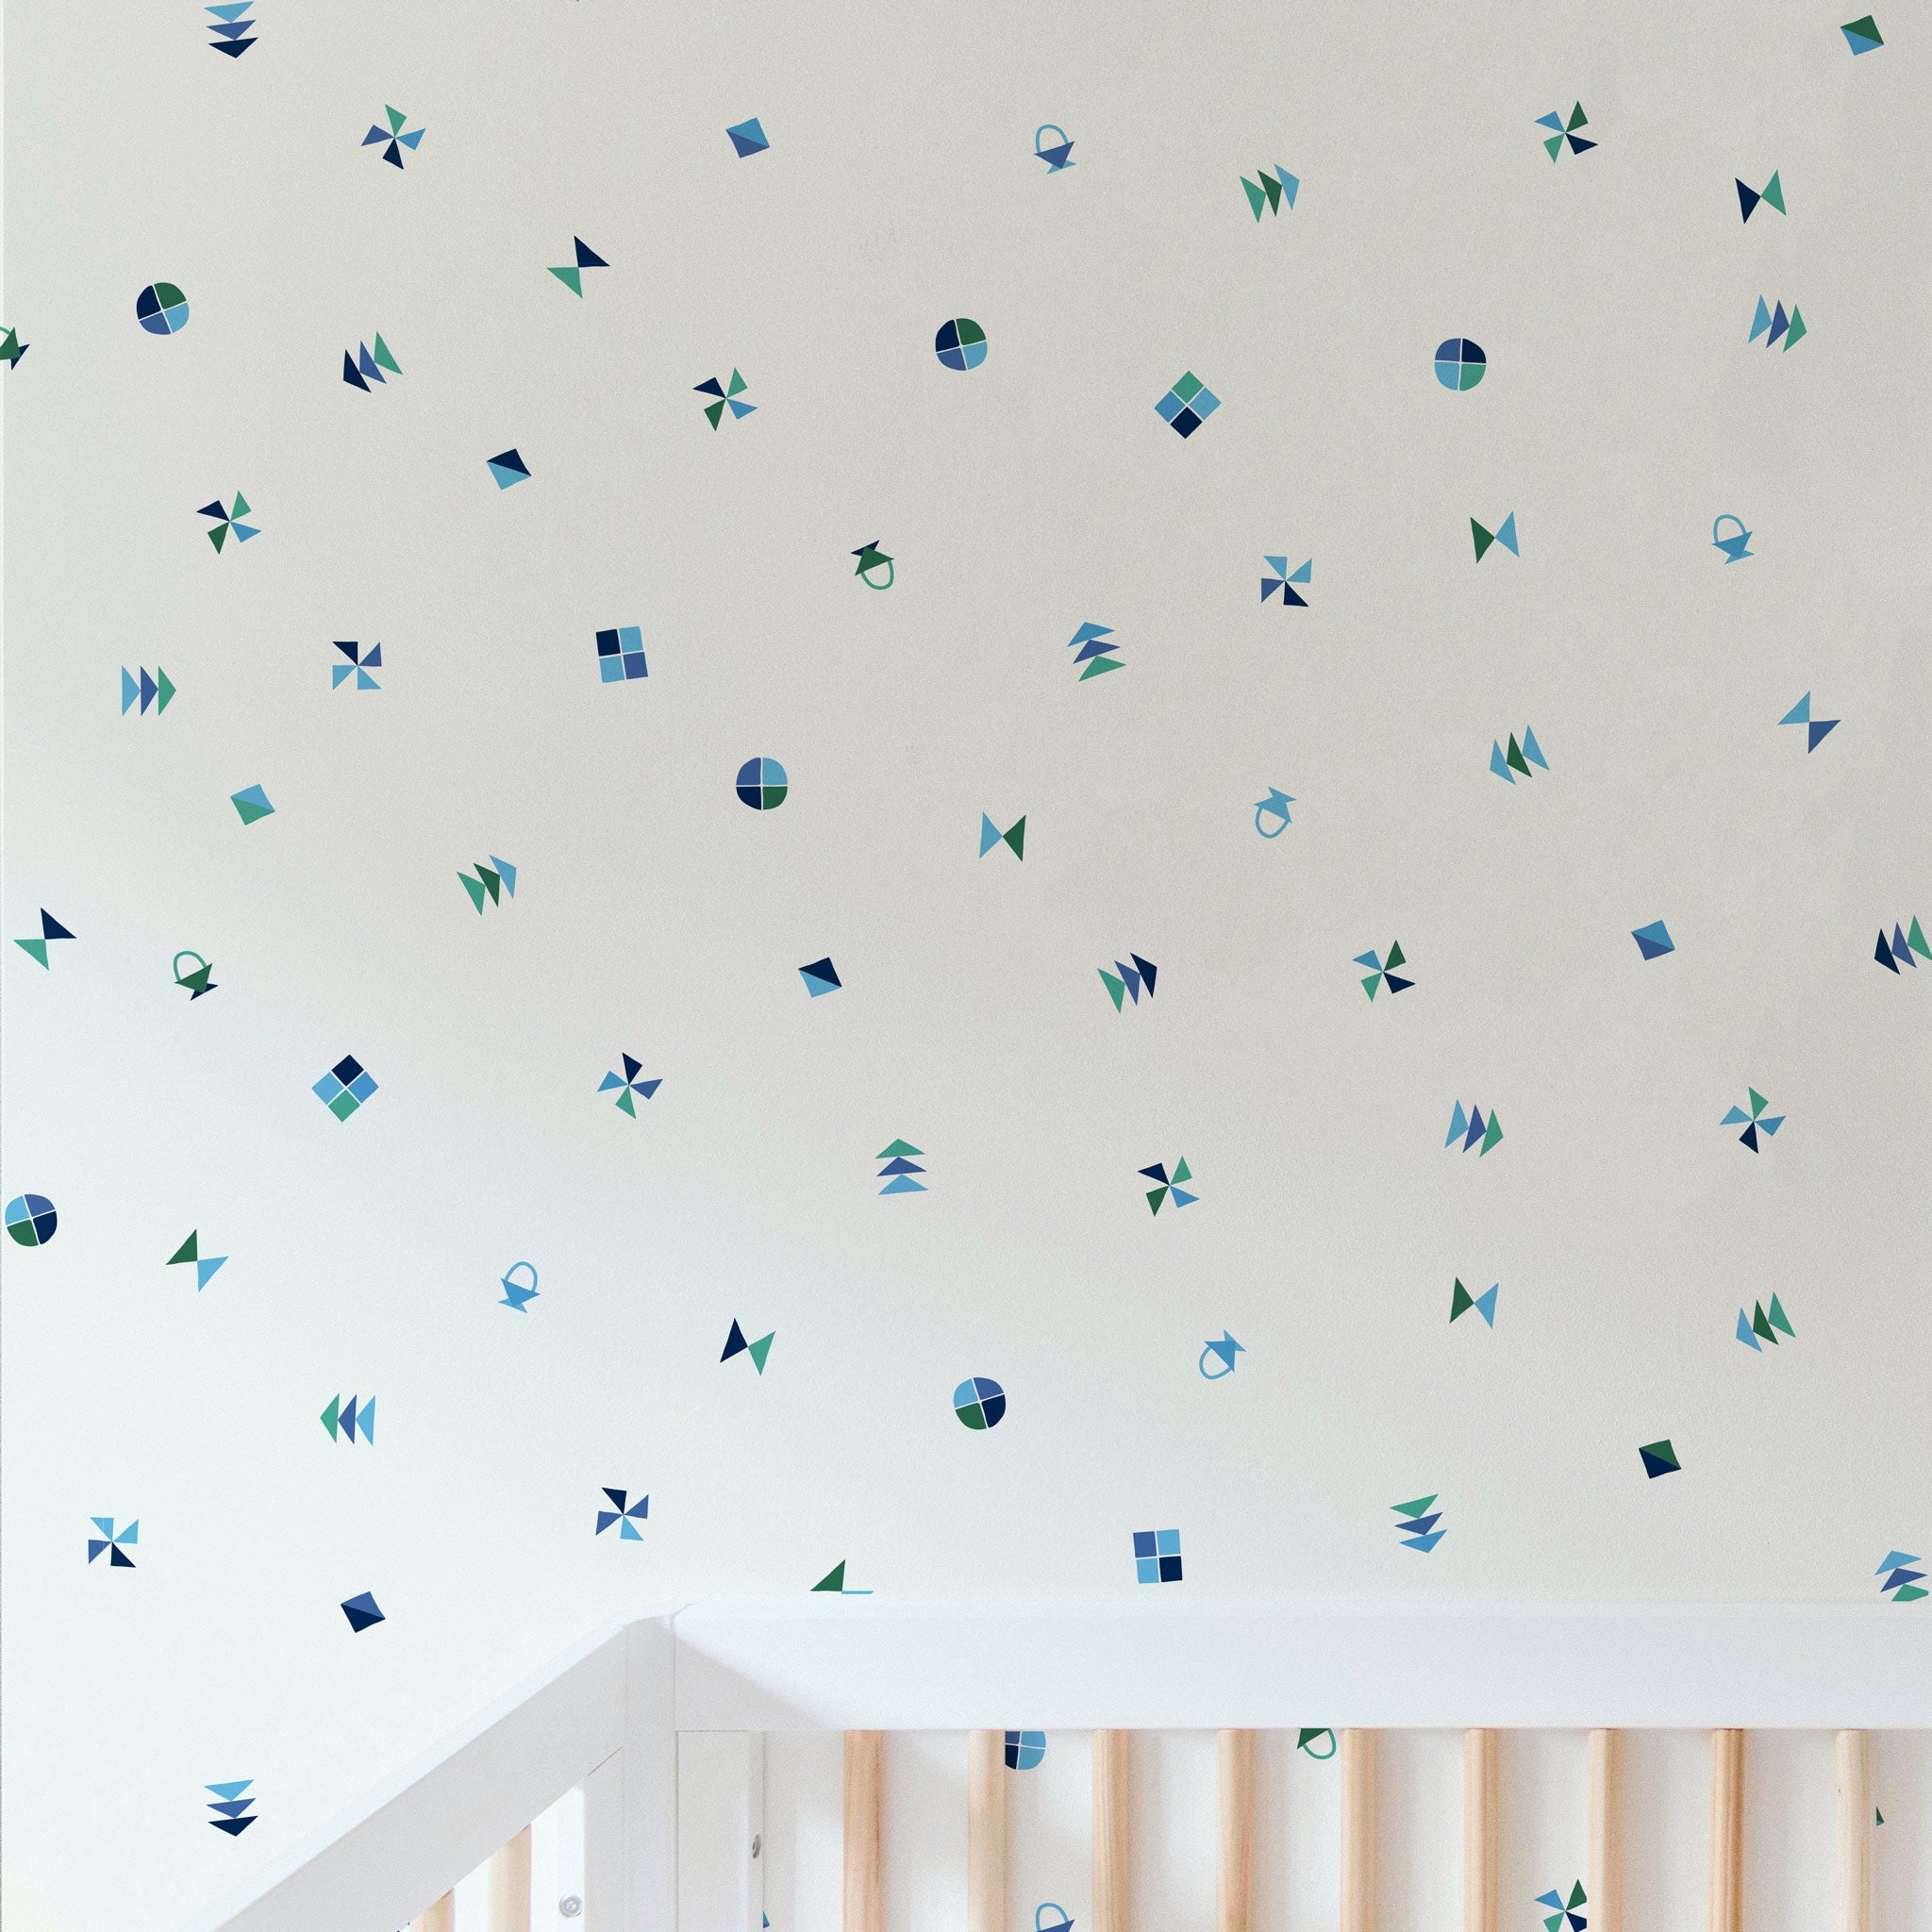 Five Patch Design Tossed Quilt Motifs wallpaper